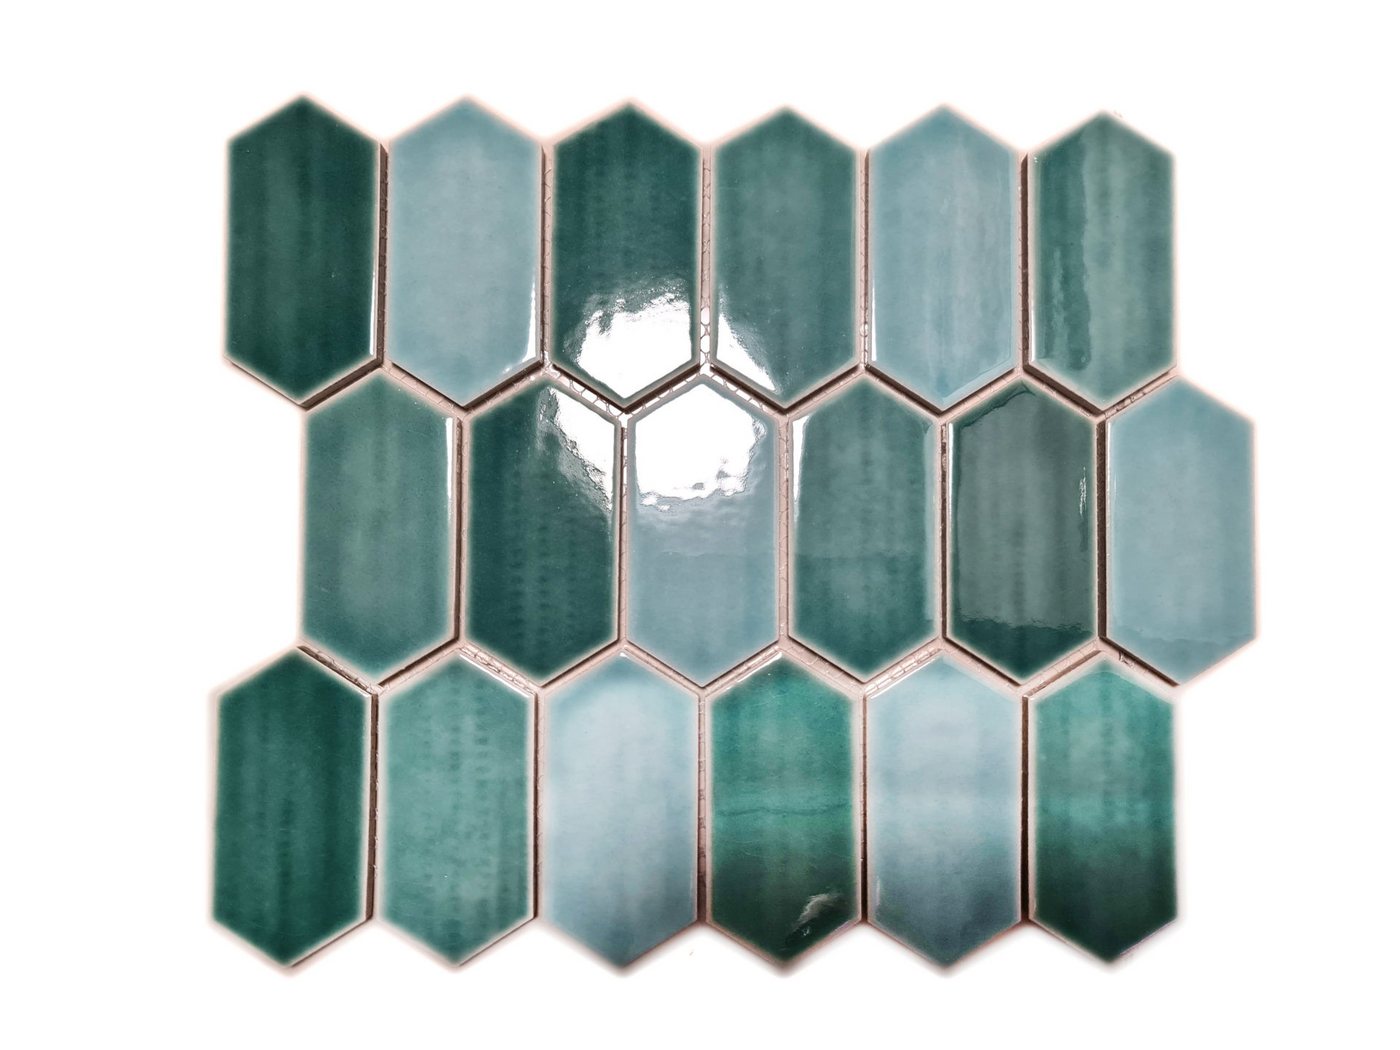 Mosani Mosaikfliesen Keramikmosaik Mosaikfliesen grün glänzend / 10 Mosaikmatten von Mosani